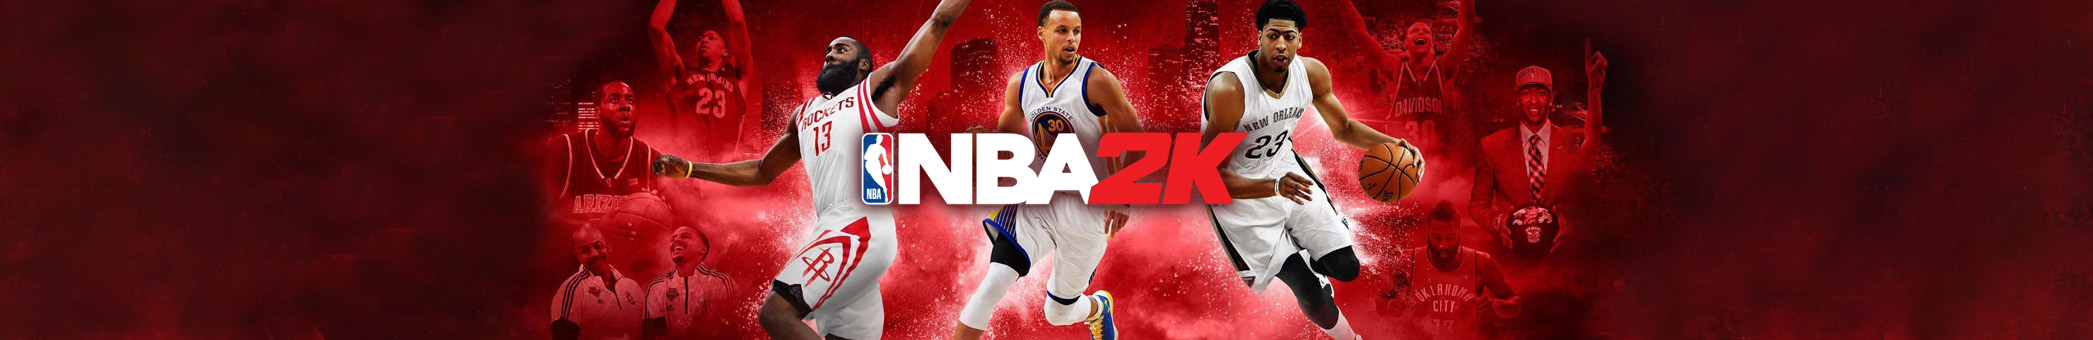 NBA 2K Digital Edition